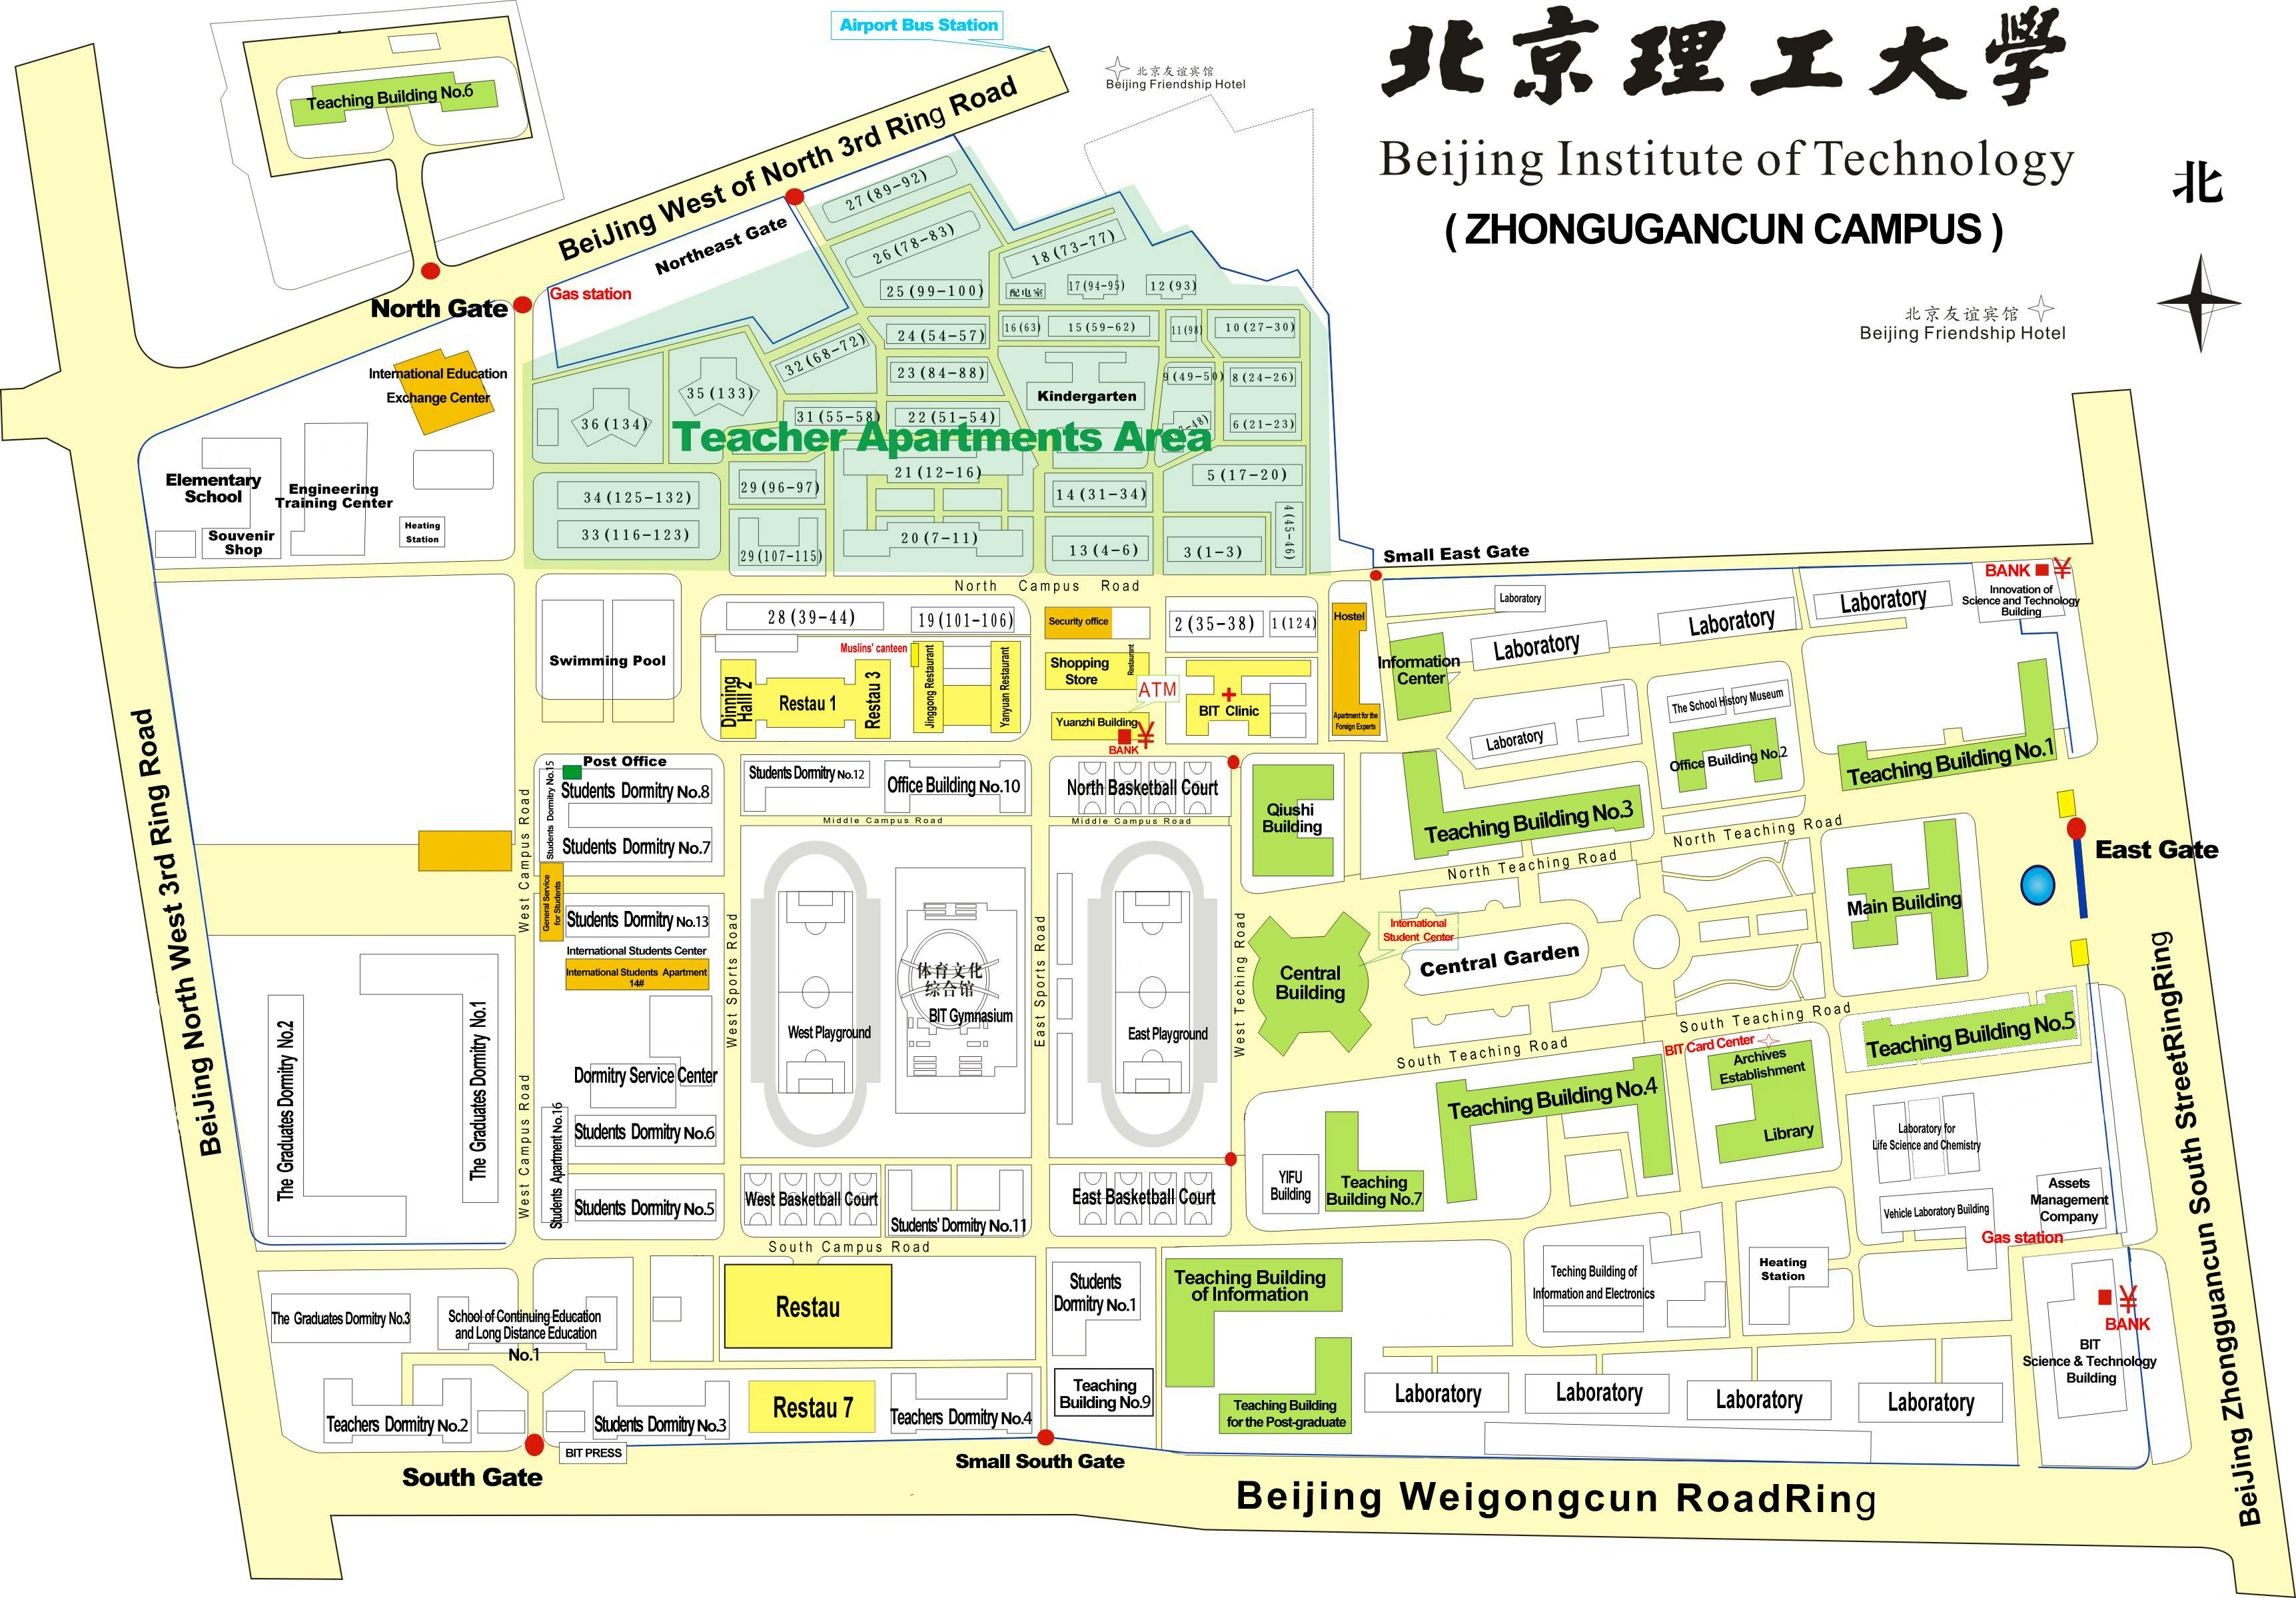 Beijing Institute of Technology Campus Ichnography 1